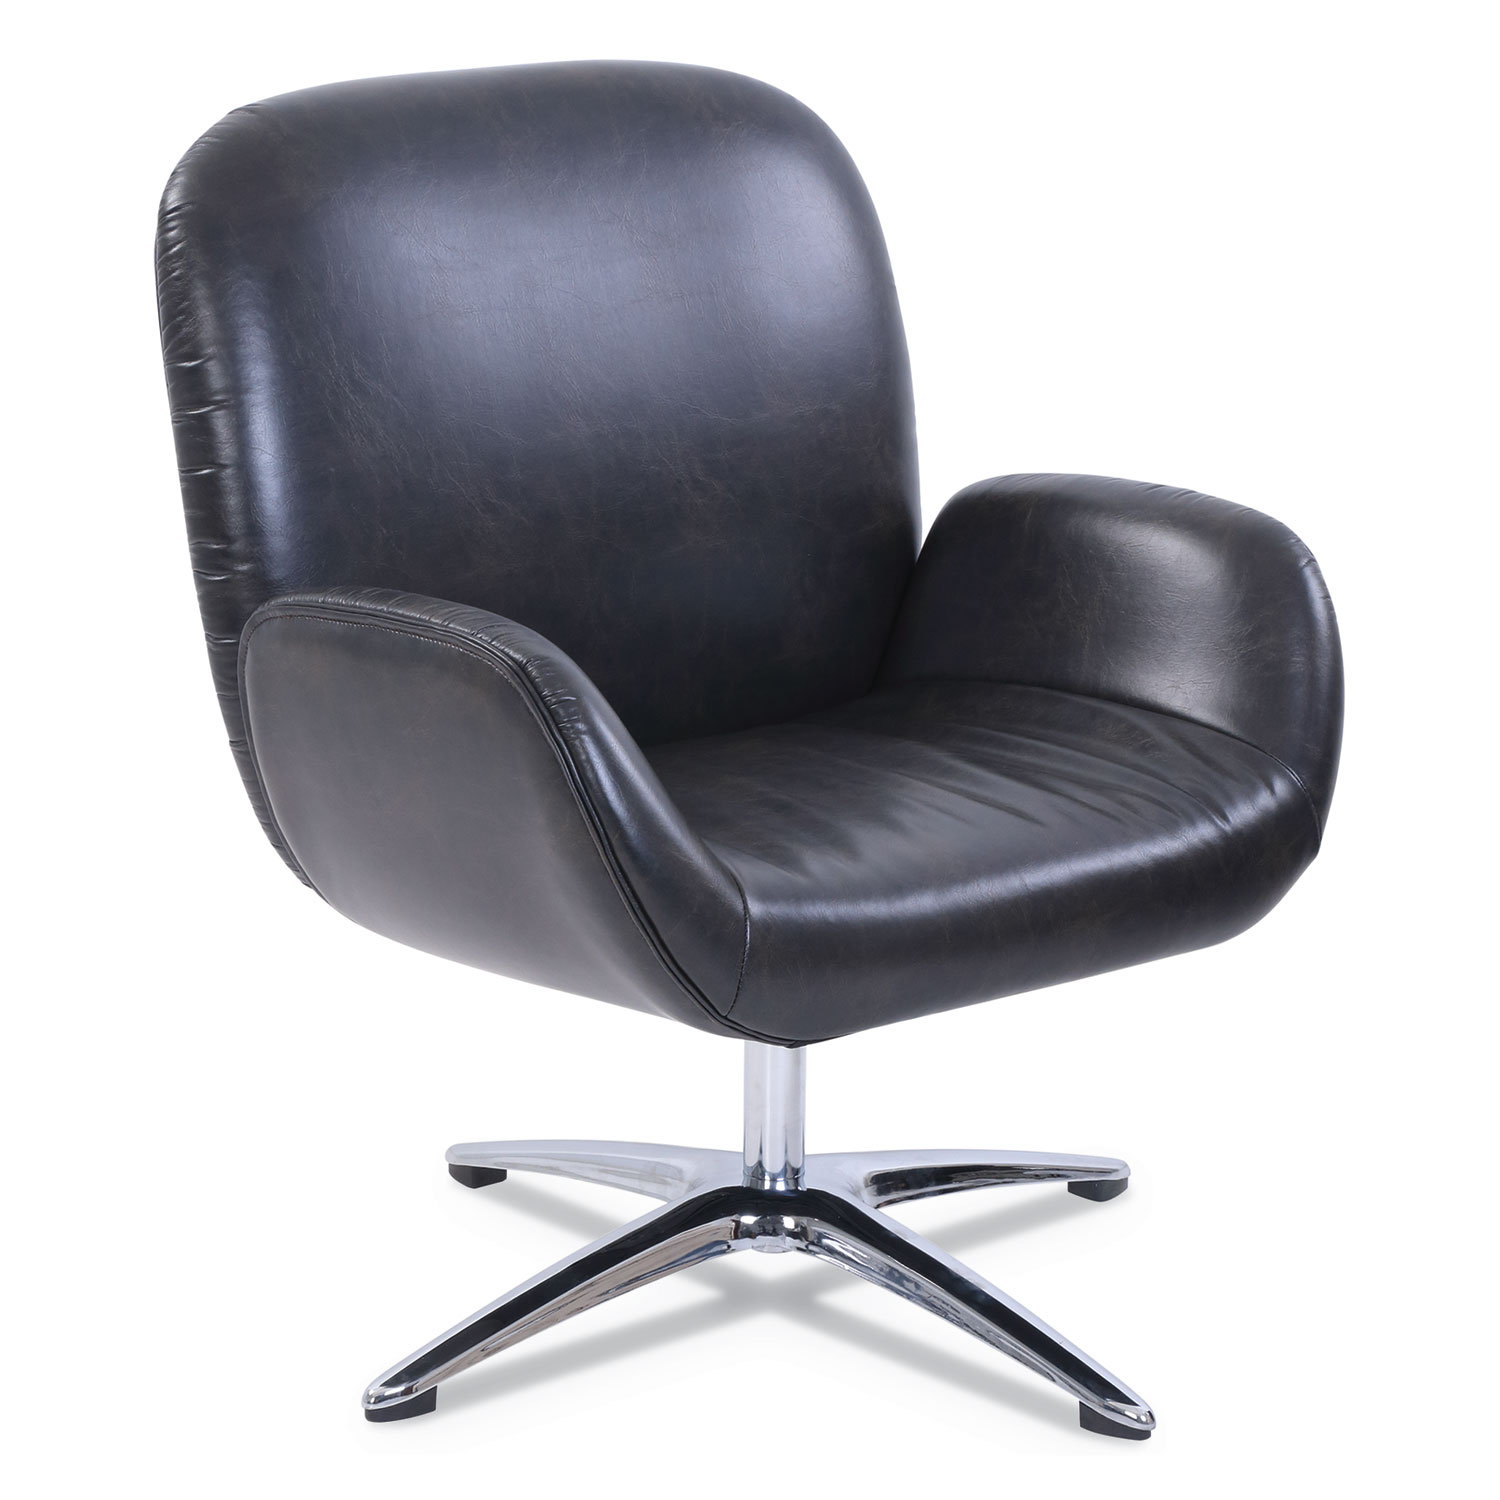  SertaPedic 49688 Tavern Collection Lounge Chair, 31.25 x 29.25 x 37.25, Distressed Brown Seat/Distressed Brown Back, Chrome Silver Base (SRJ49688) 